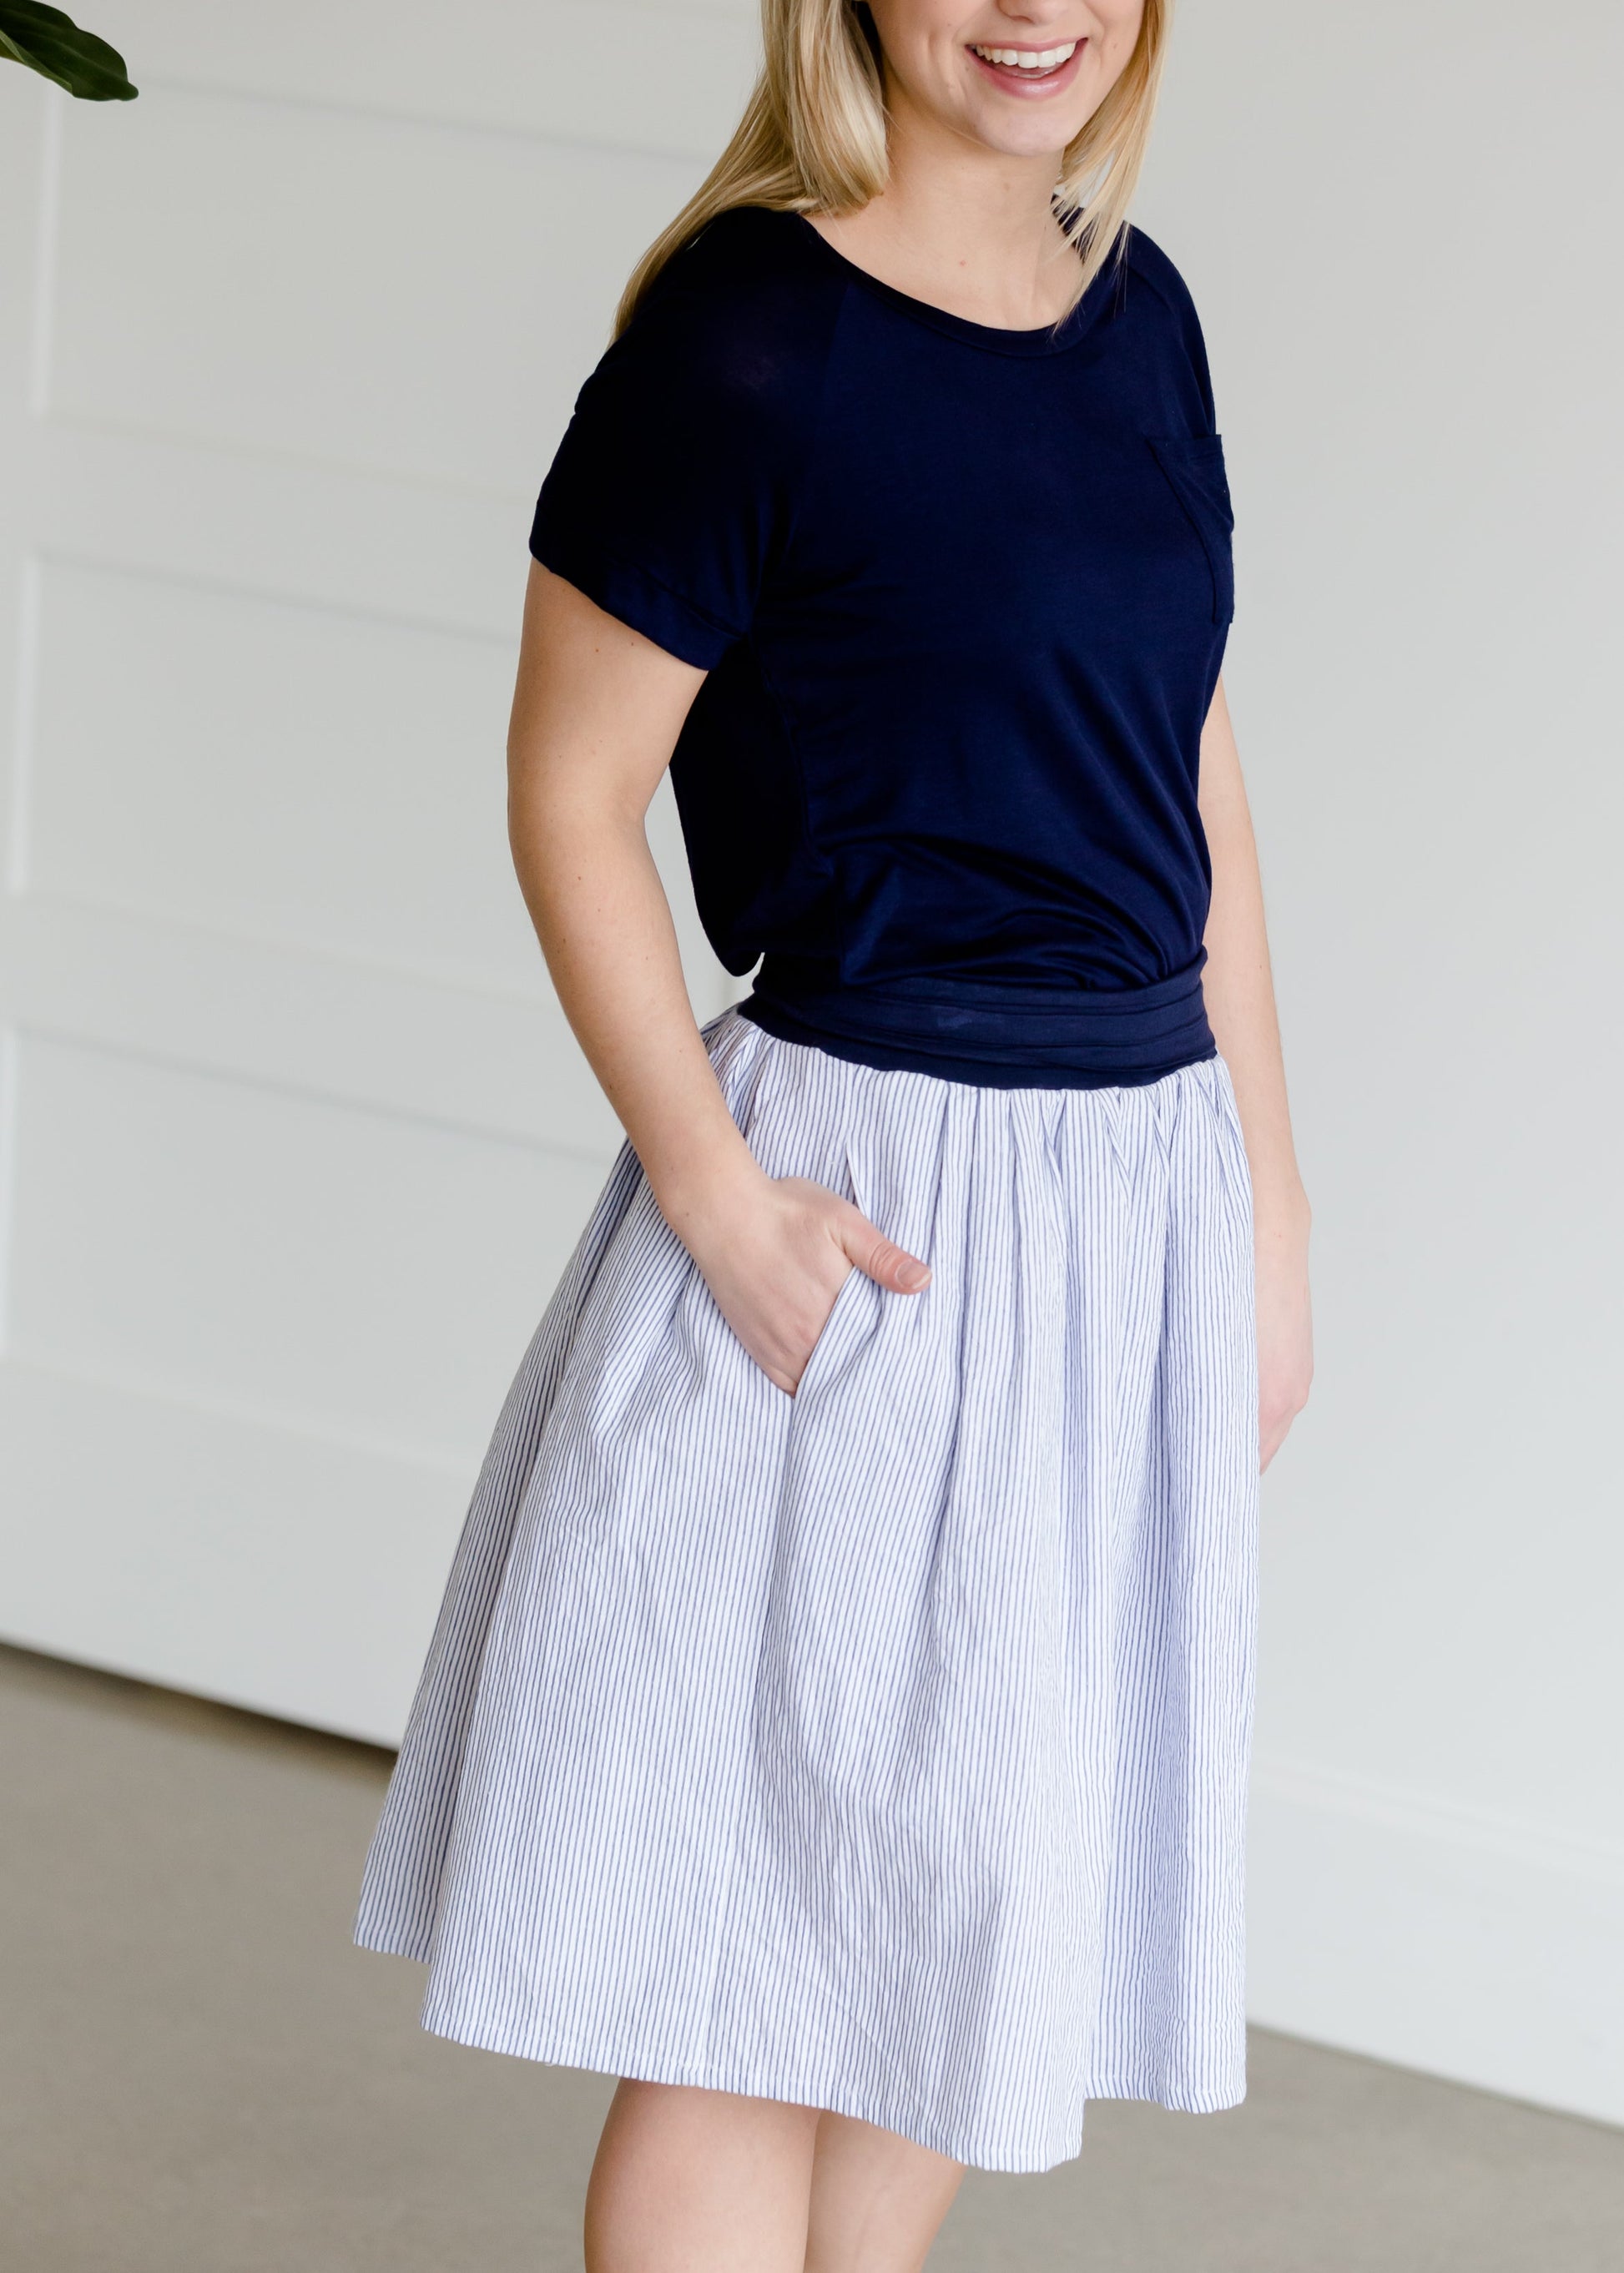 Blue and White Striped Midi Skirt - FINAL SALE Skirts